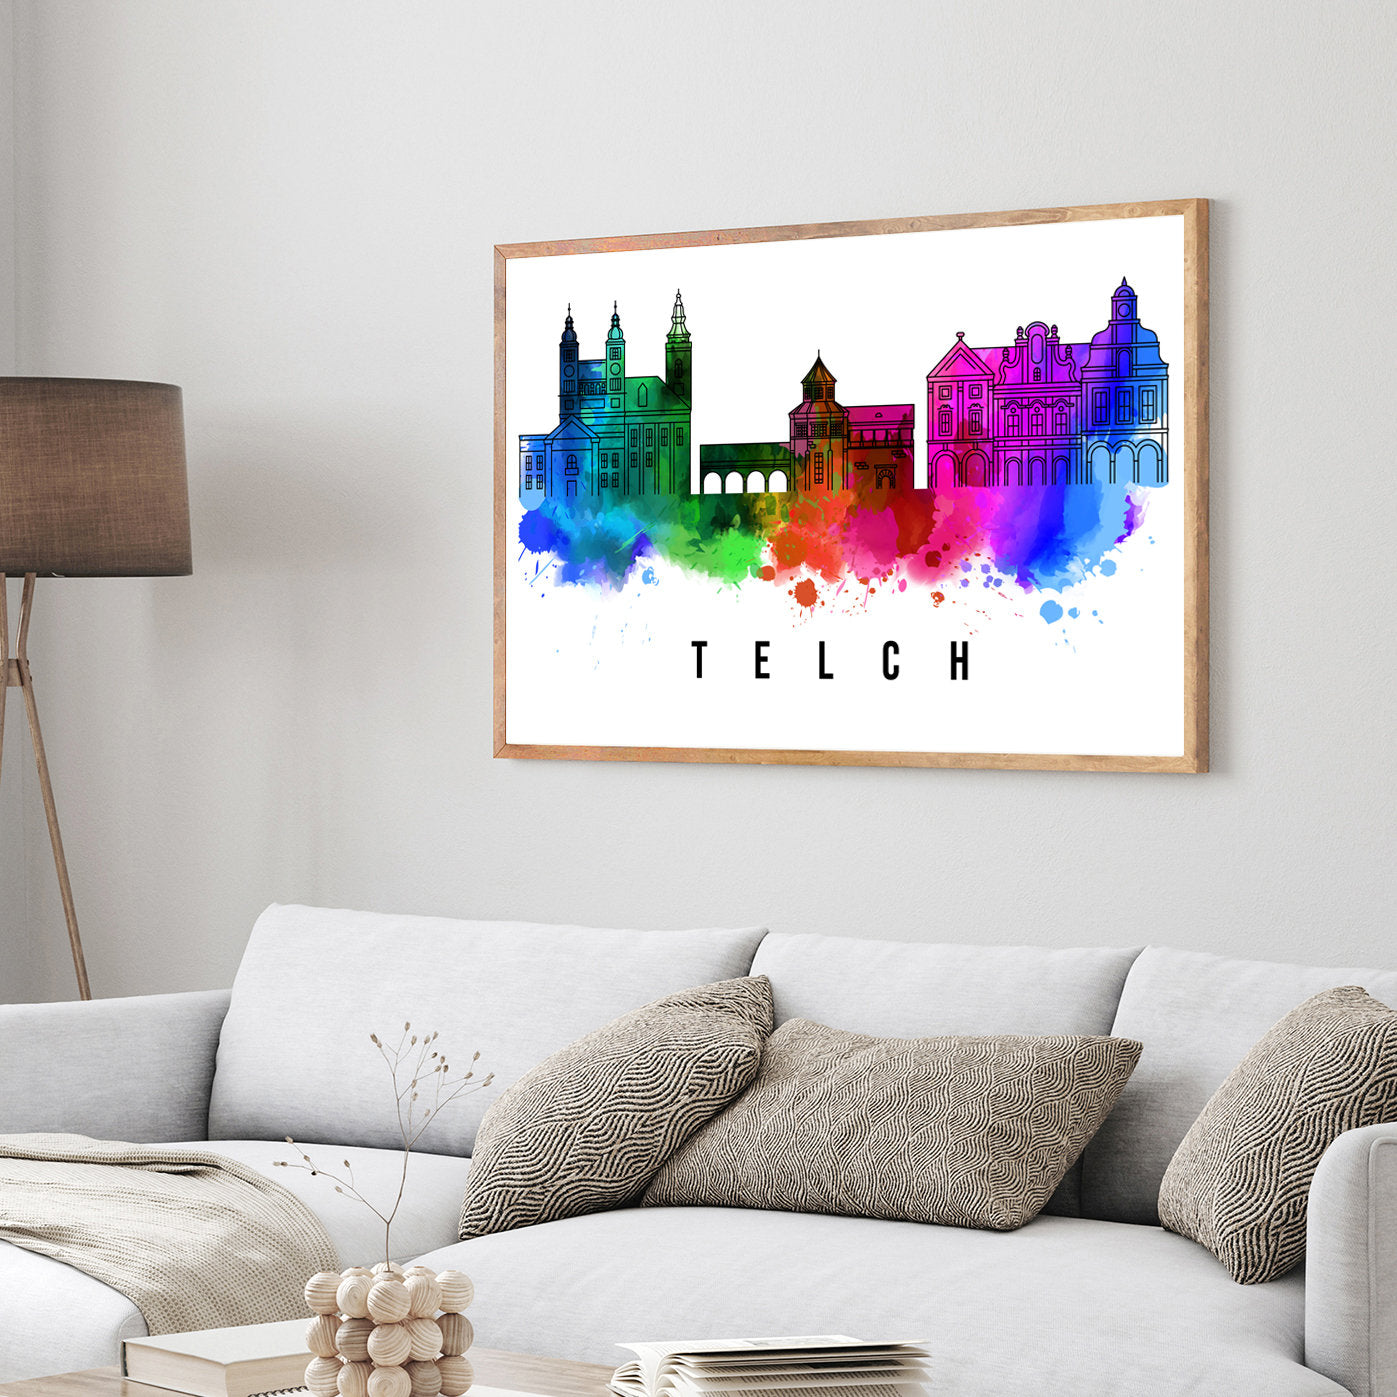 Telc Czech Republic Poster, Skyline poster cityscape poster, Landmark City Illustration poster, Home wall decoration, Office wall art